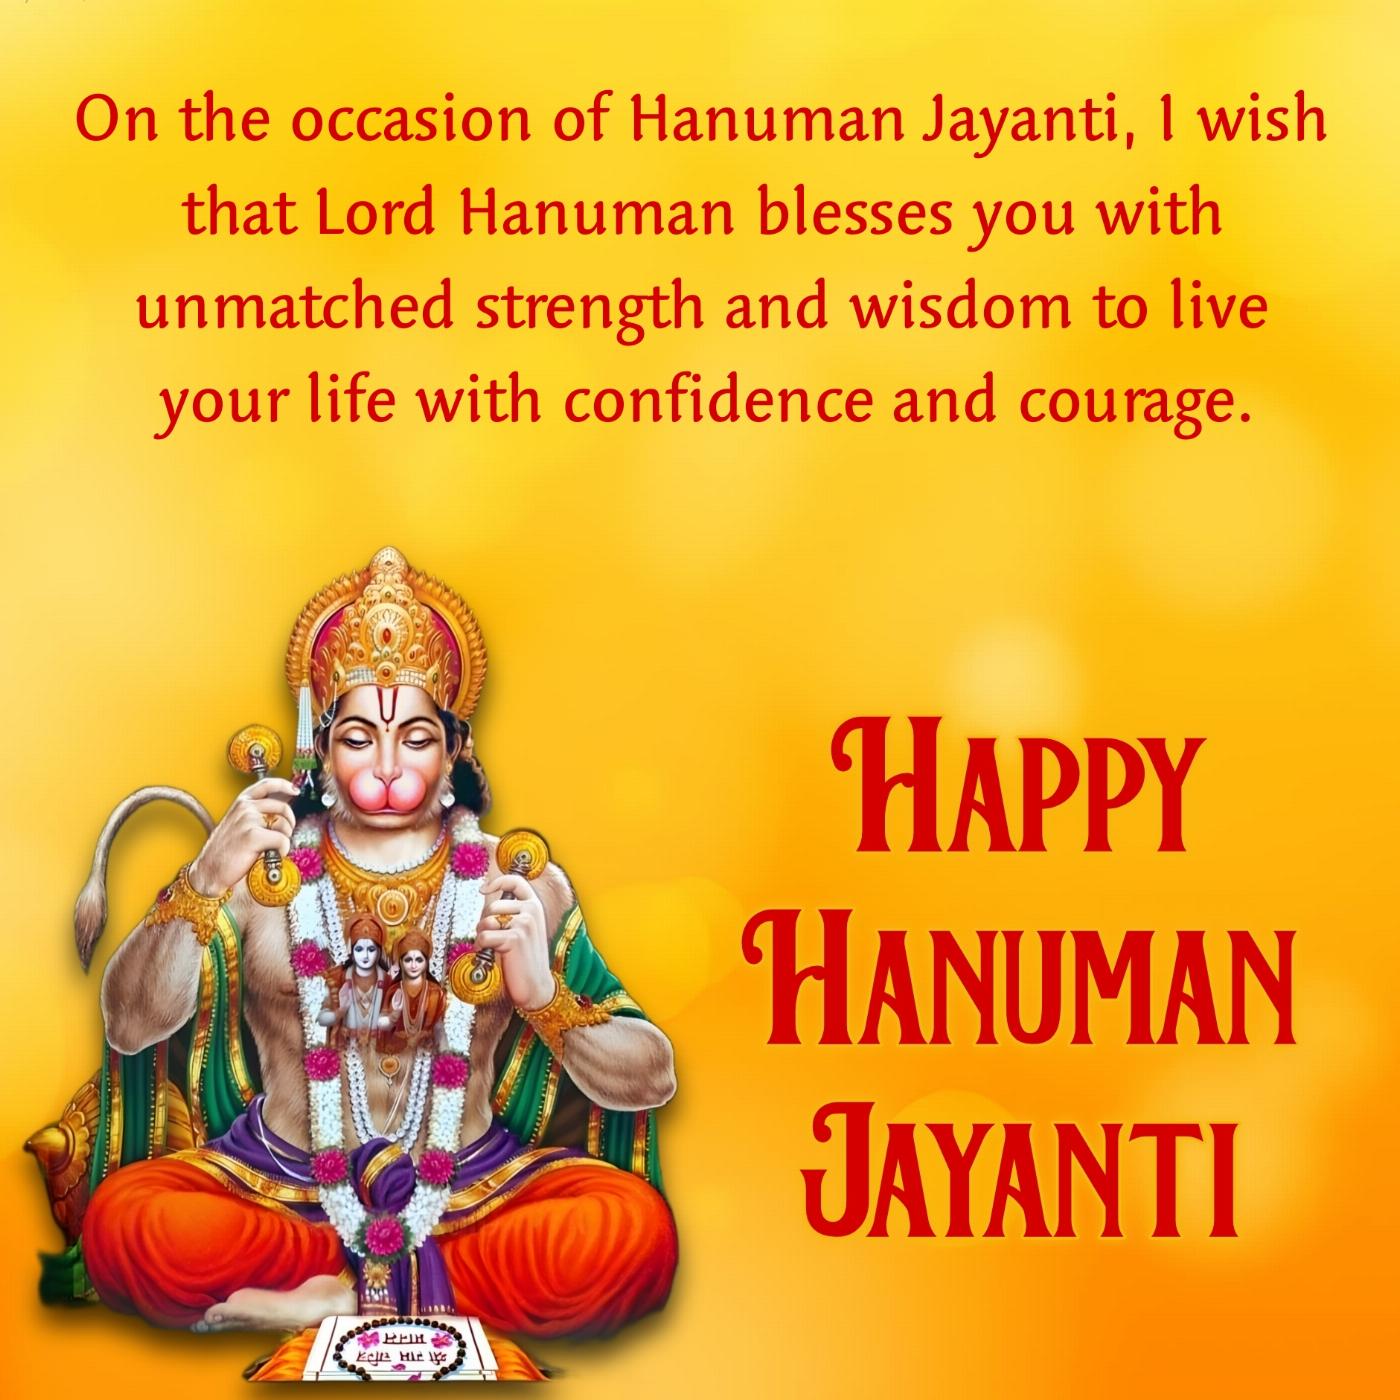 On the occasion of Hanuman Jayanti I wish that Lord Hanuman